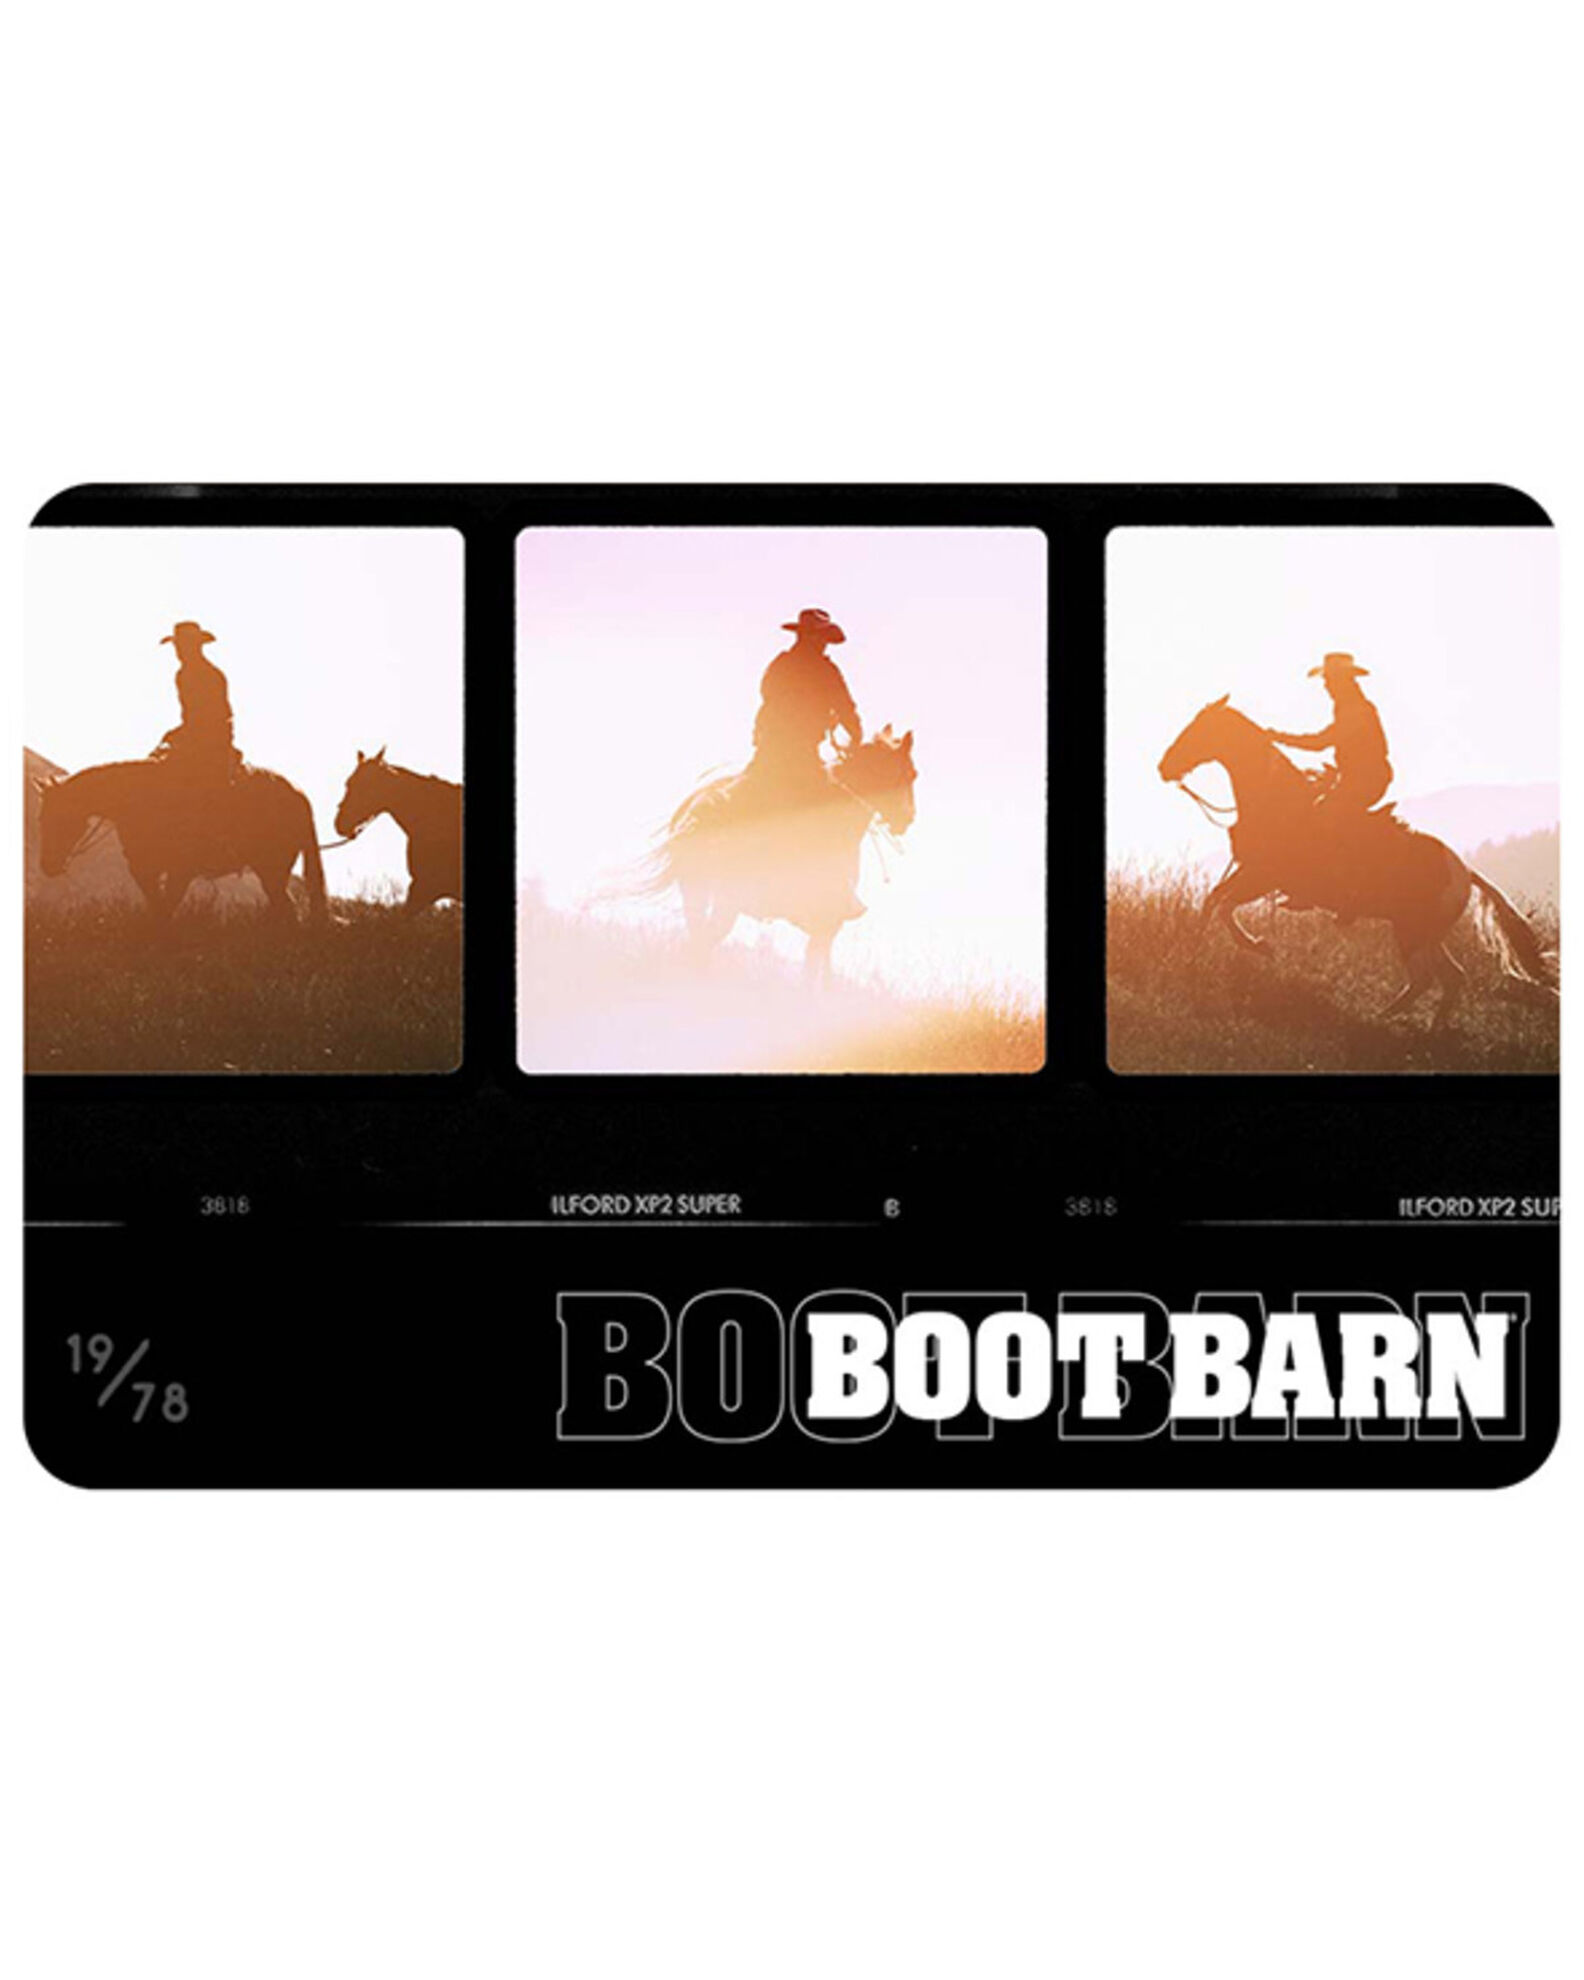 Boot Barn Credit Card - Home